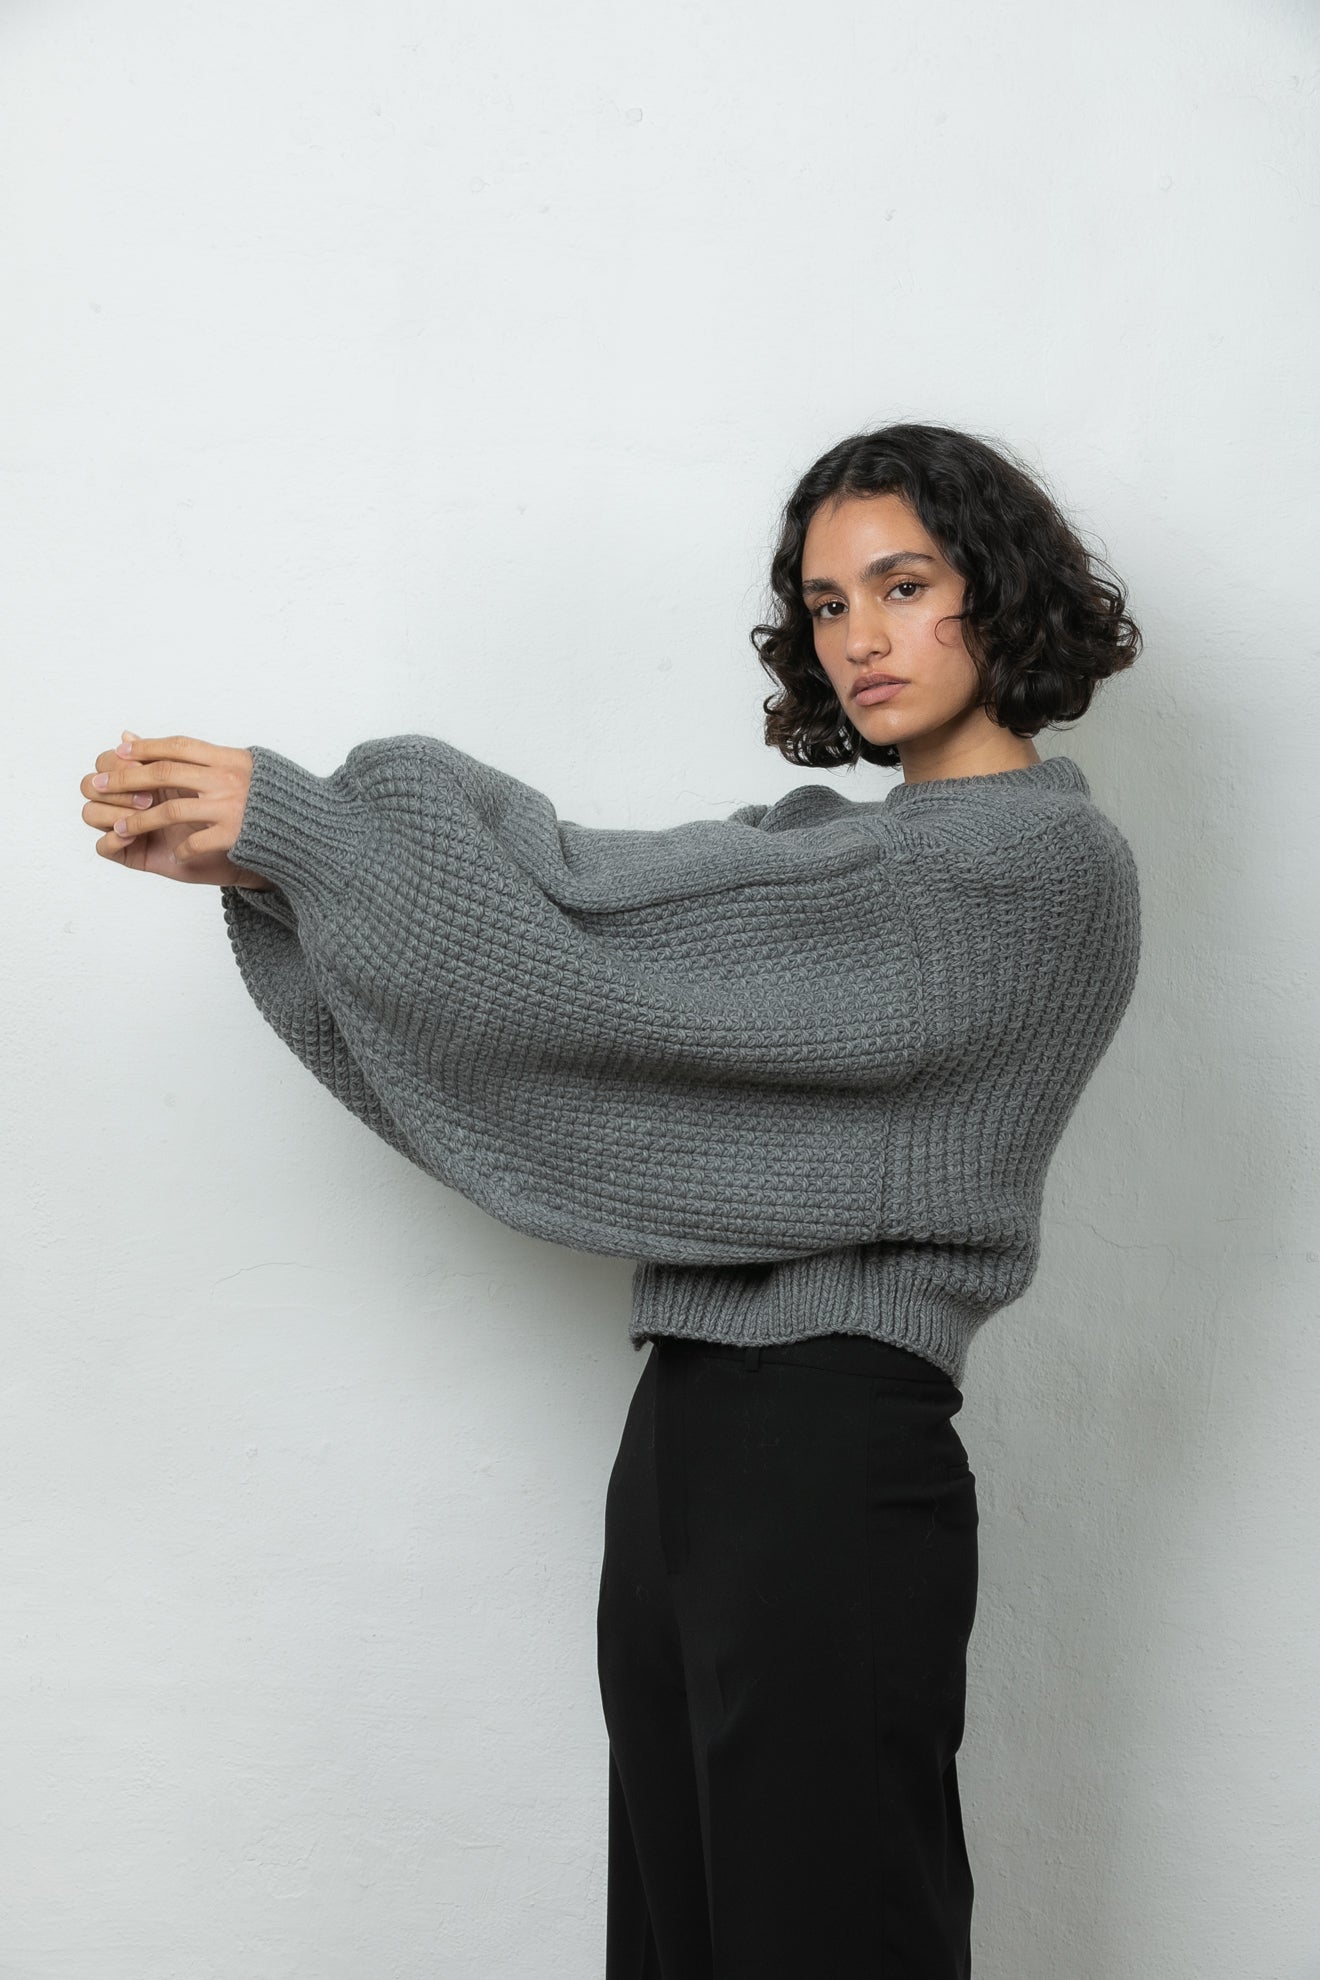 wool jumper sweater knit Mr Mittens winter grey charcoal